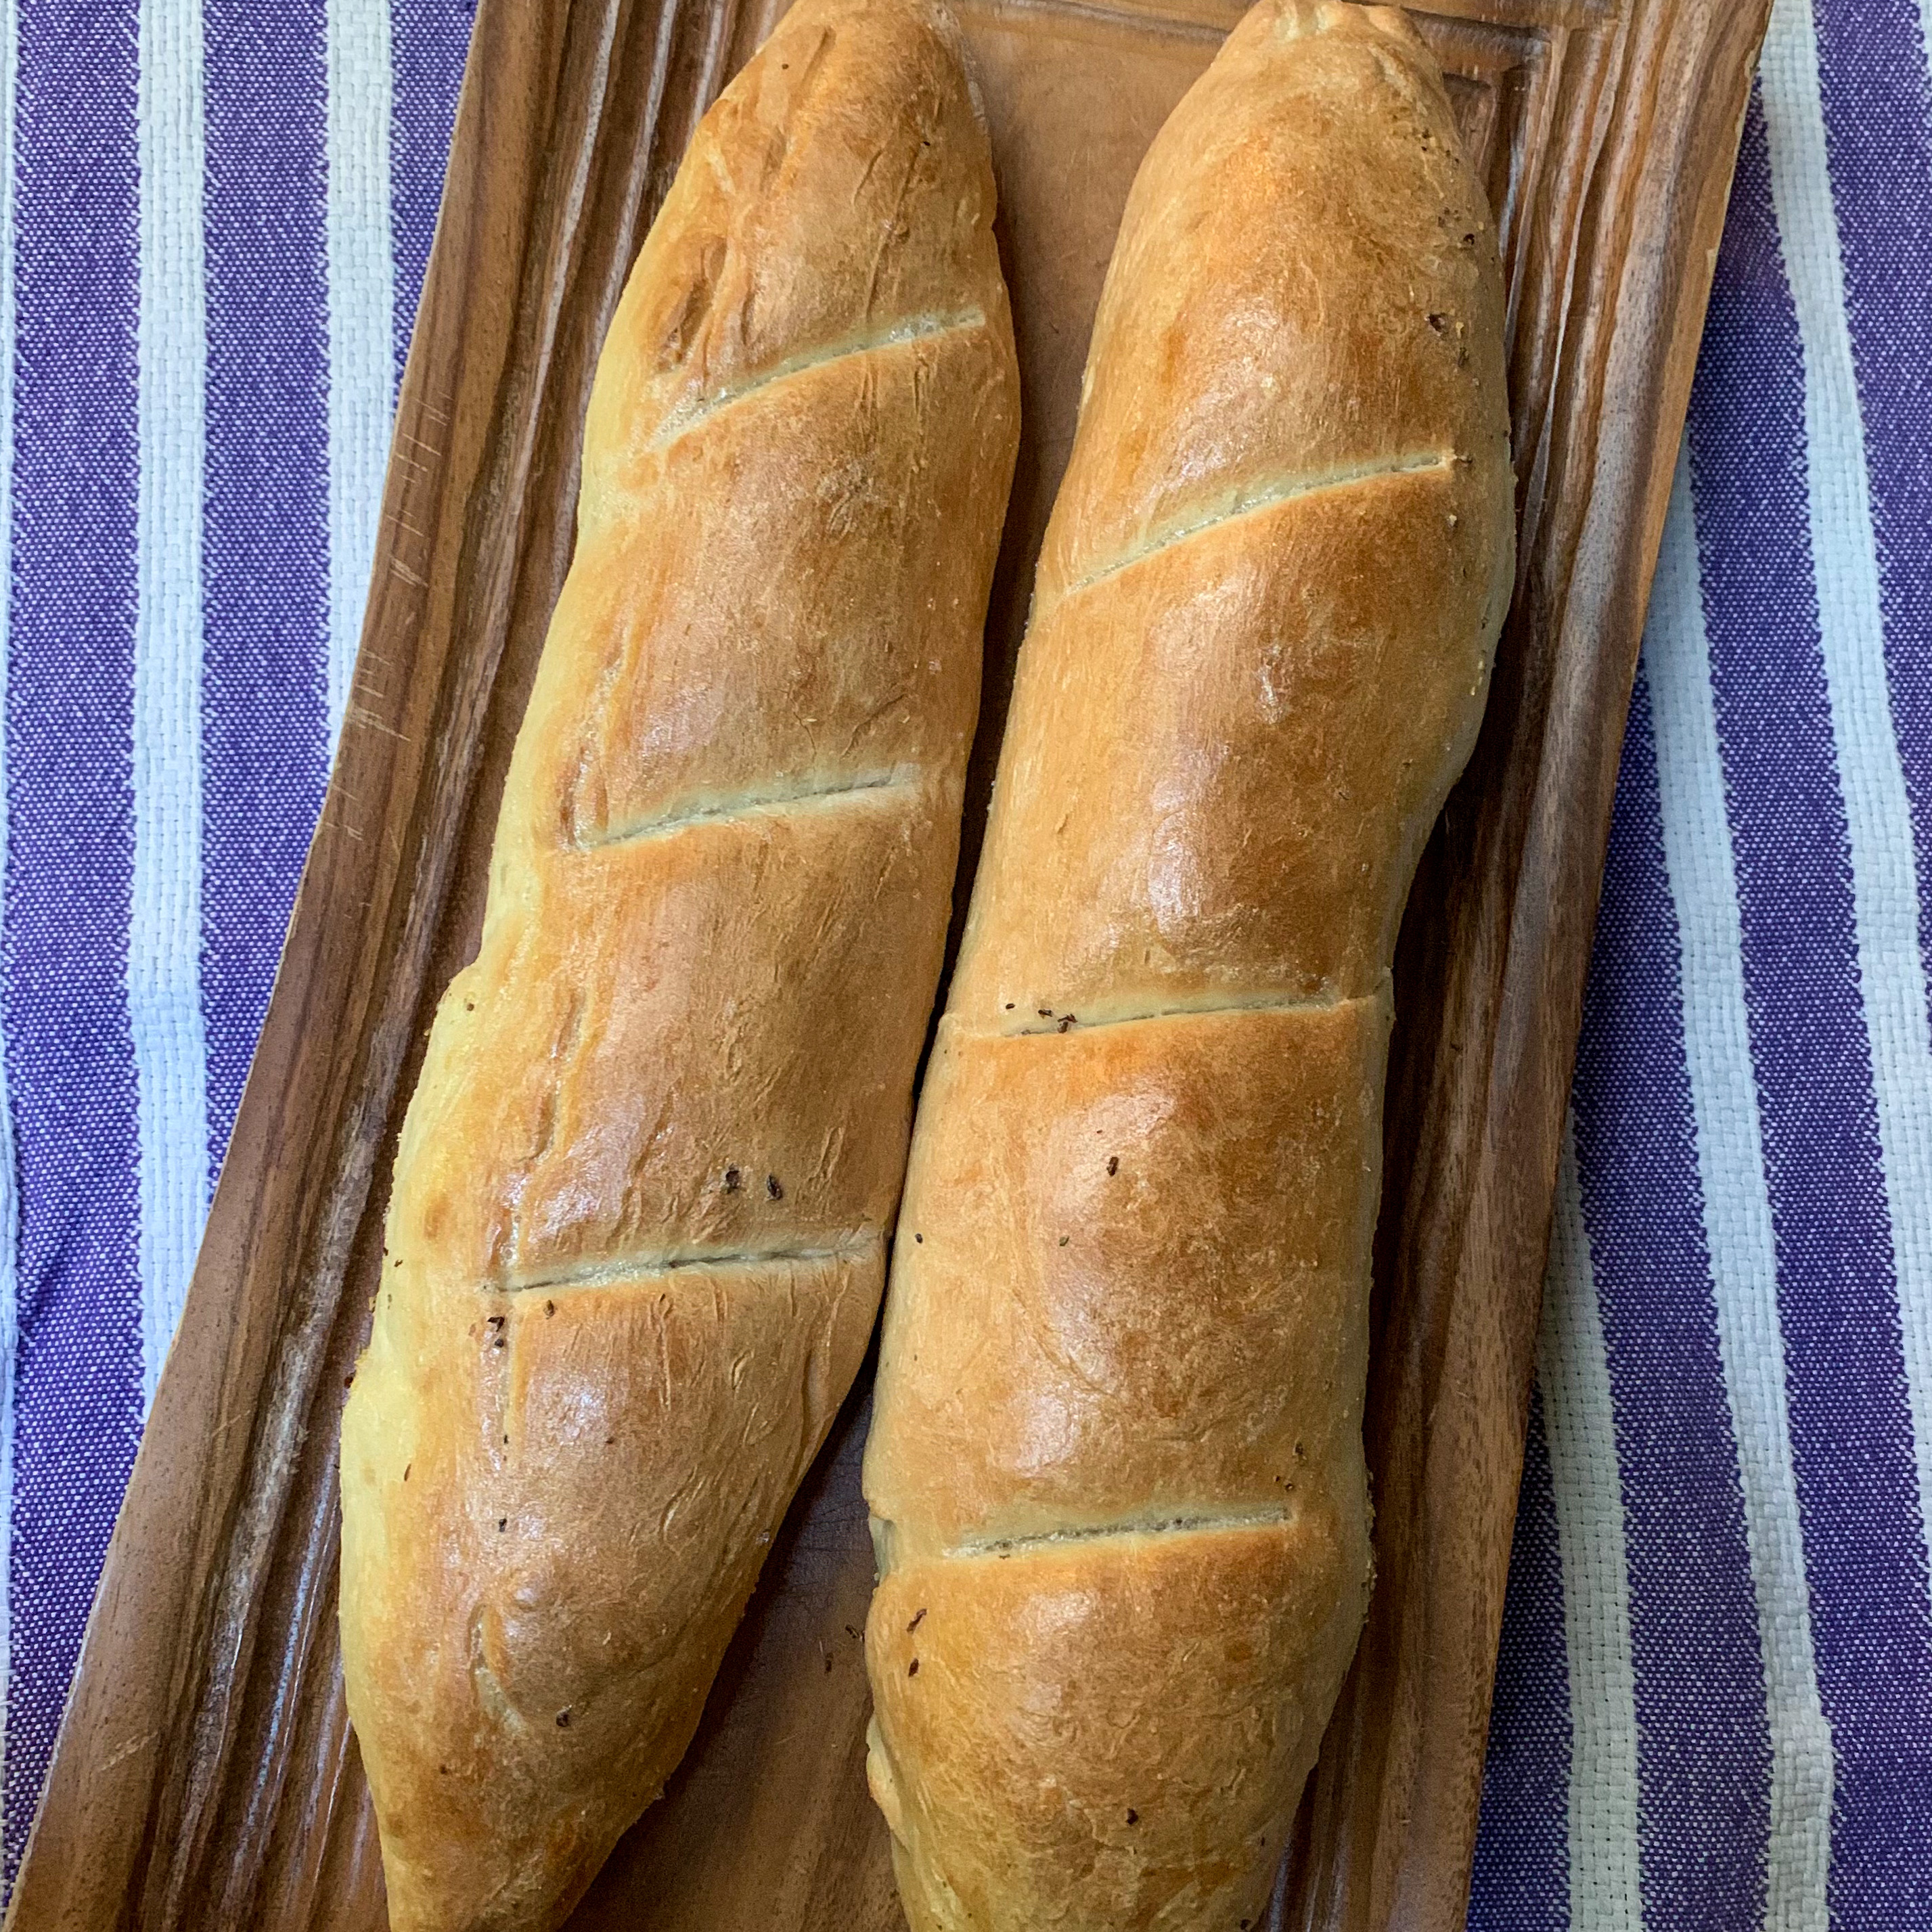 Italian loaves